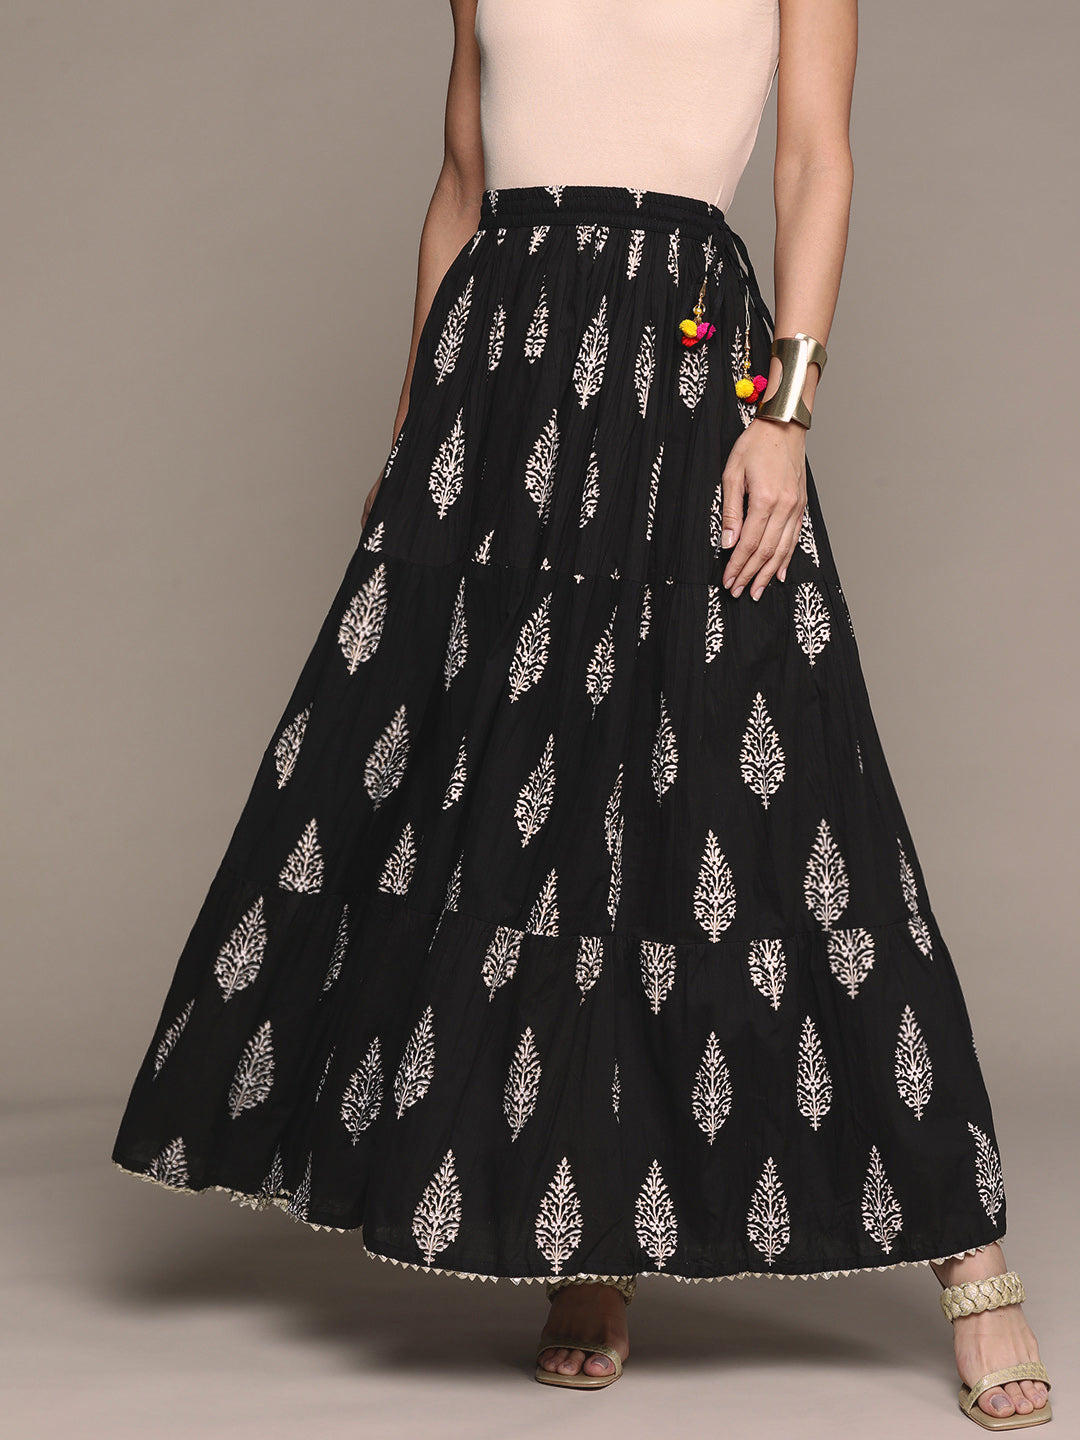 Ishin Women's Cotton Black Foil Printed Flared Maxi Skirt